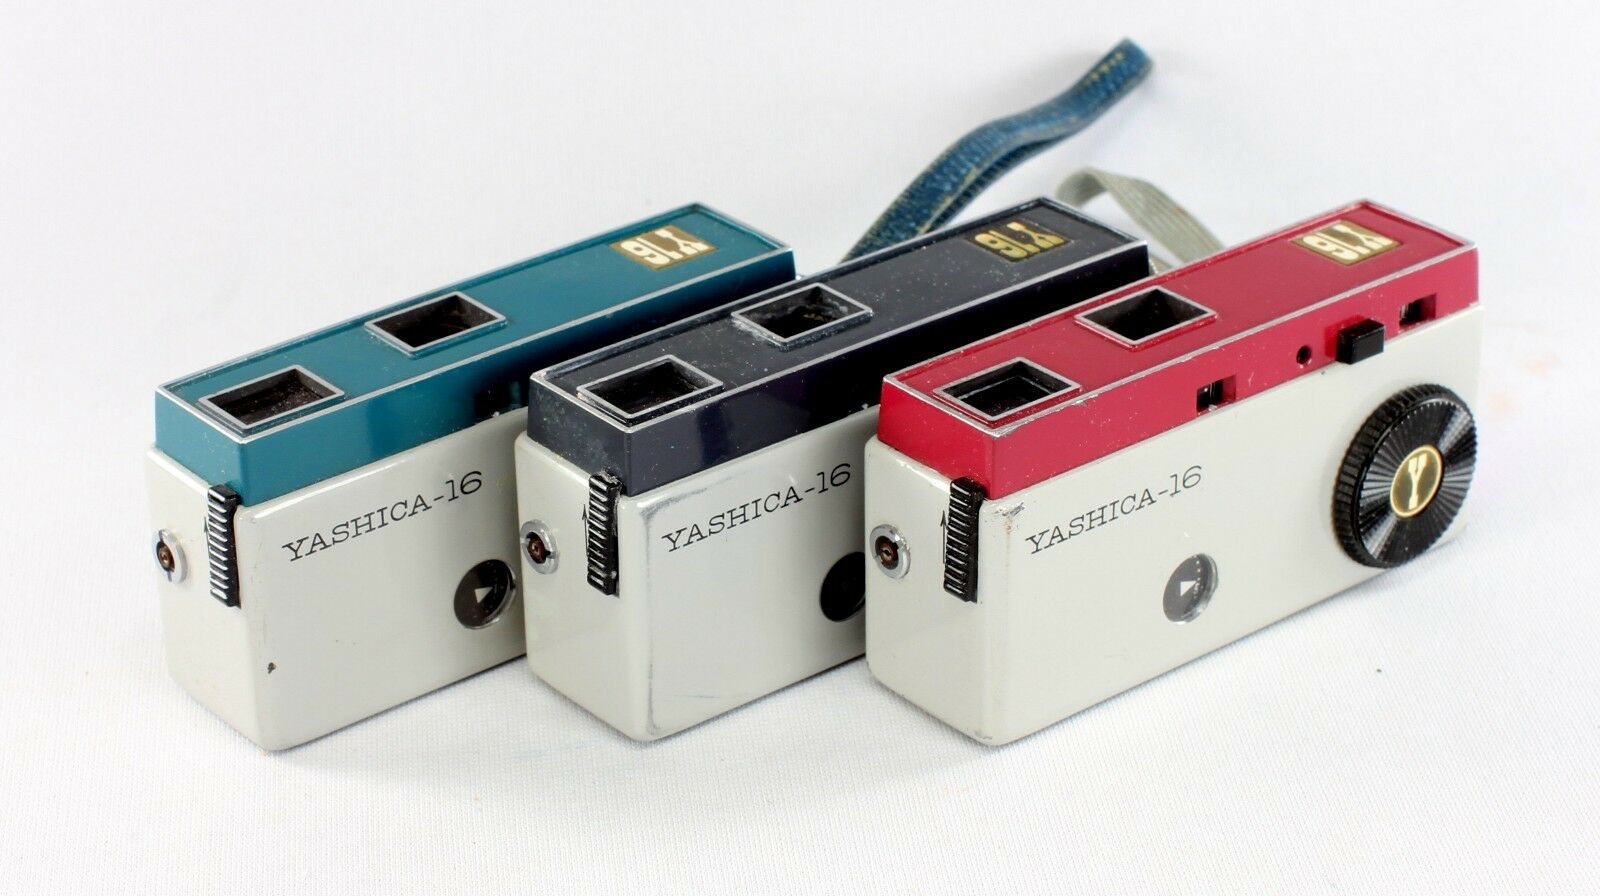 3 Origi.yashica Y16 Cameras, 3.5/25mm, Aqua/gray, Maroon/gray, Dark/light Gray